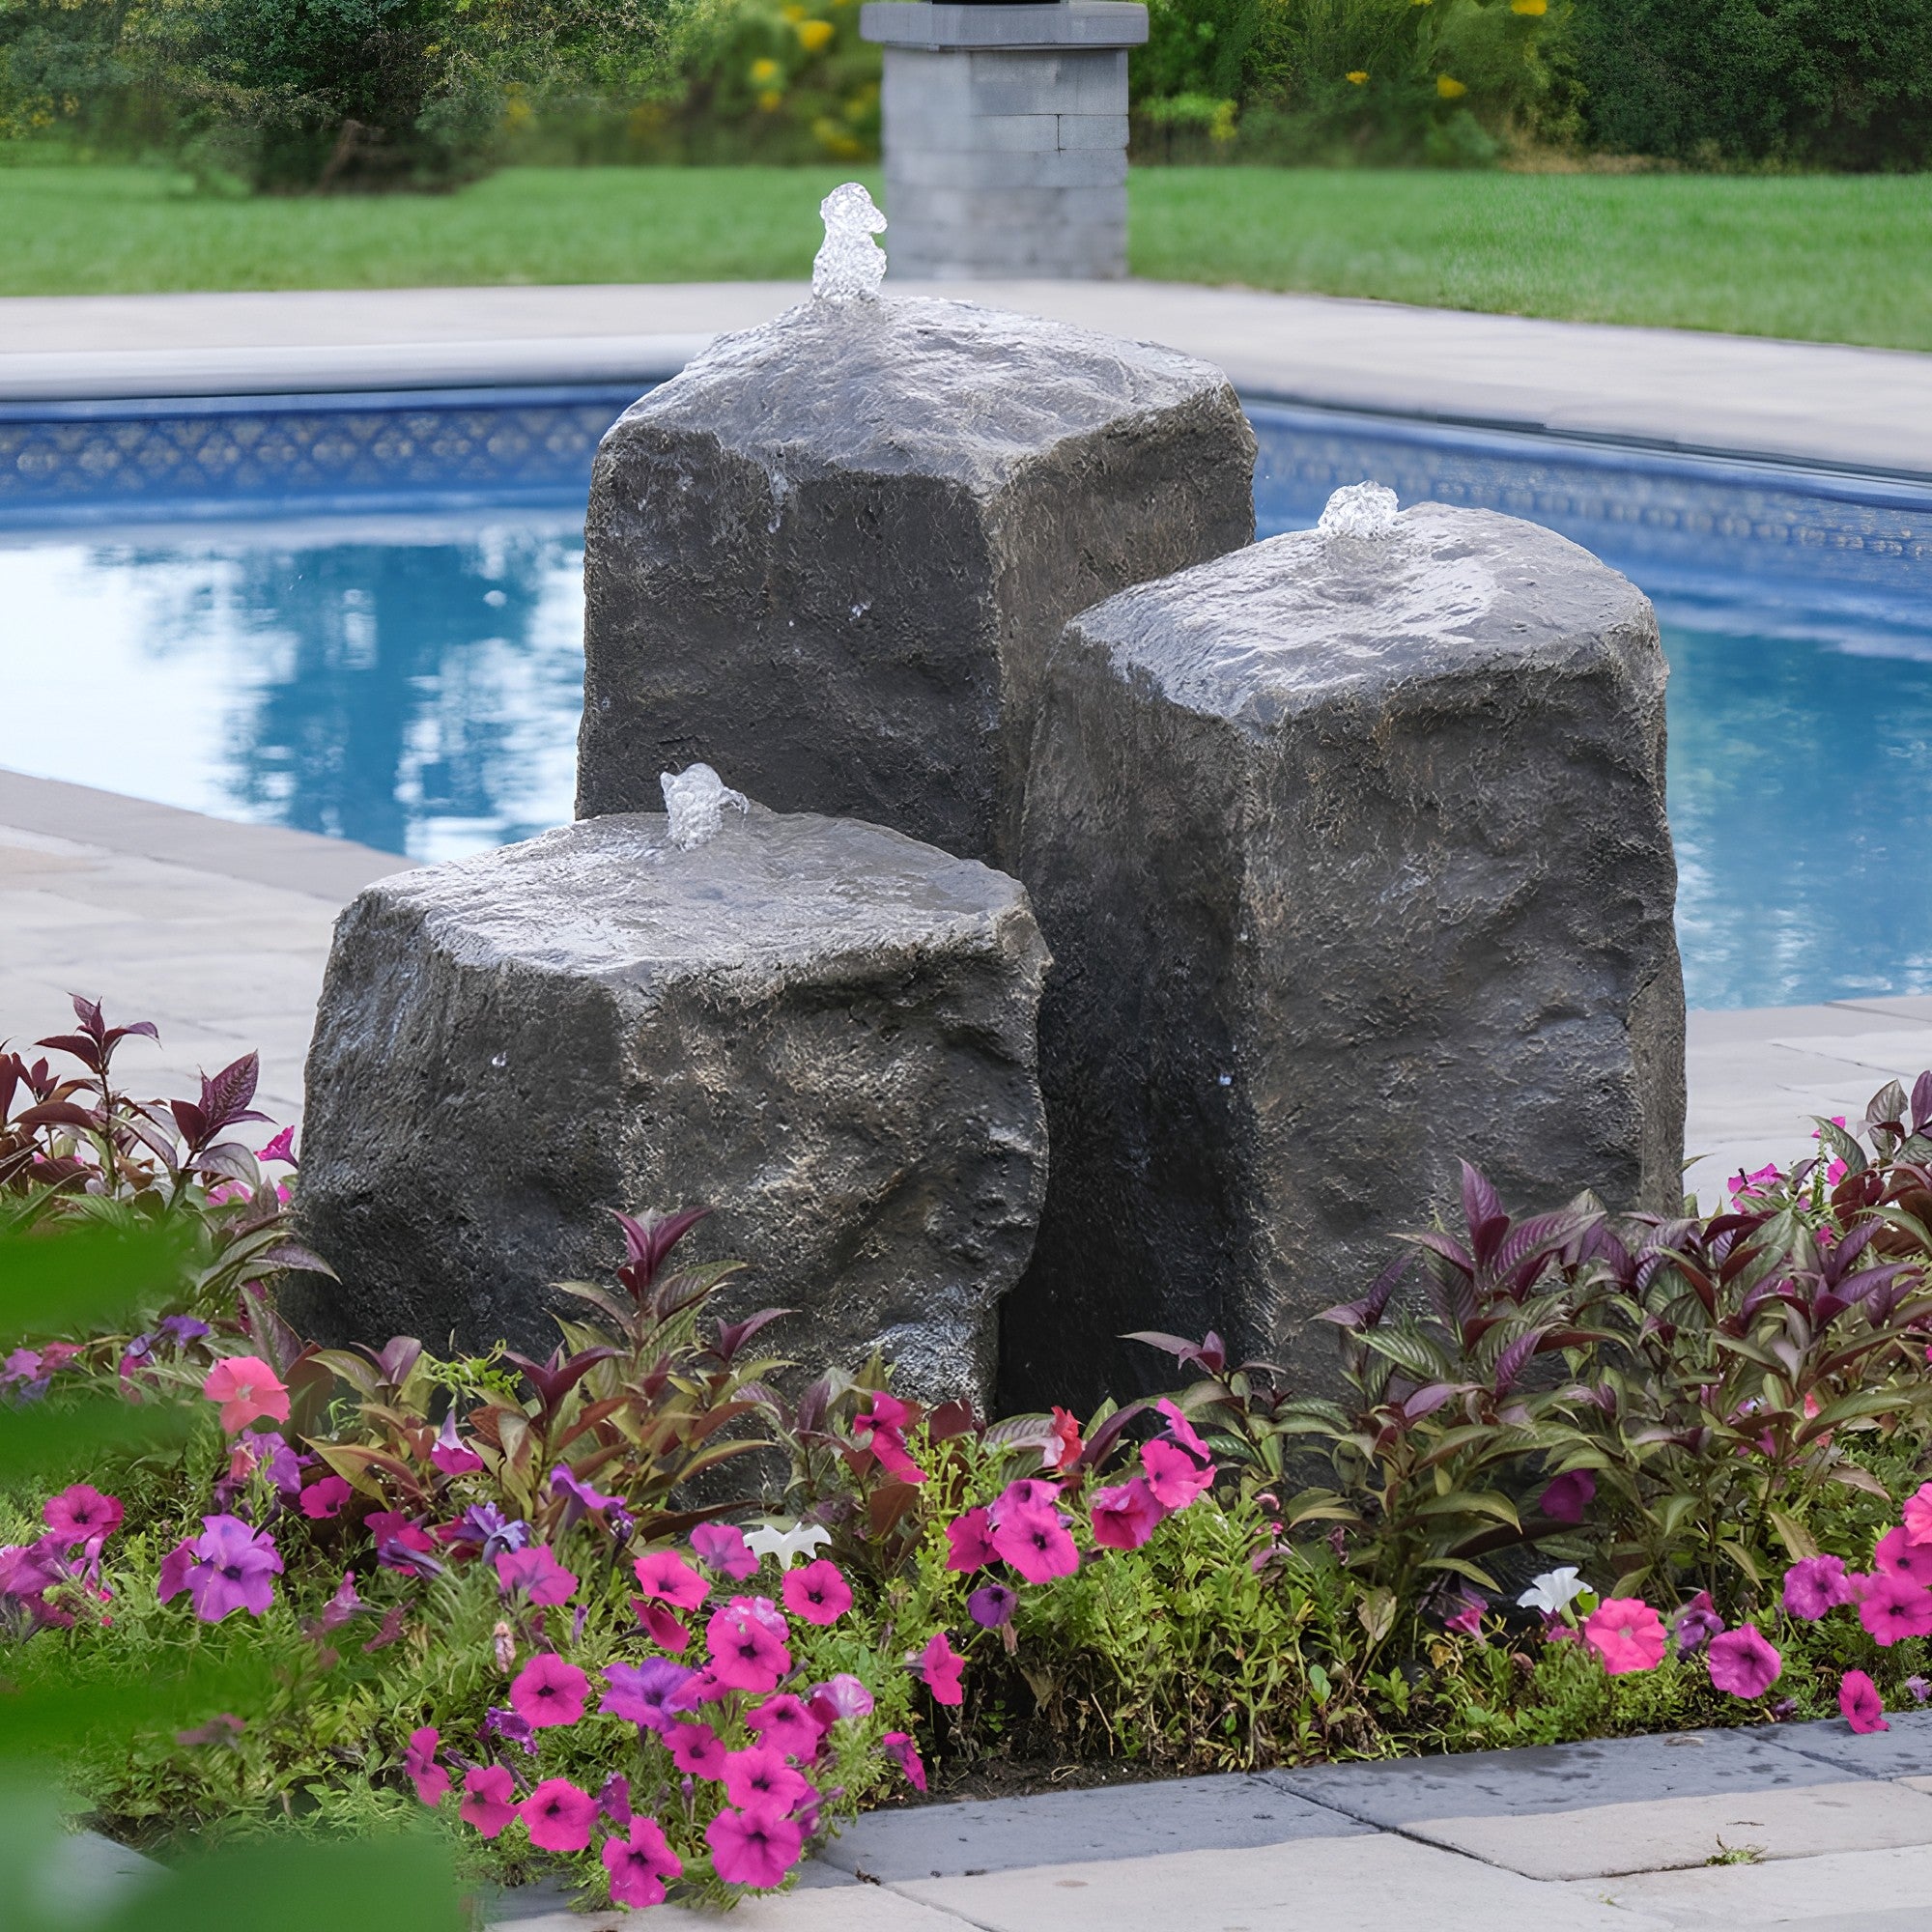 landscaping fountains, Outdoor Fountain Kits, Urn Fountains & Stone Wall Spillways Online Garden Store | Garden Fountains & Outdoor Decor